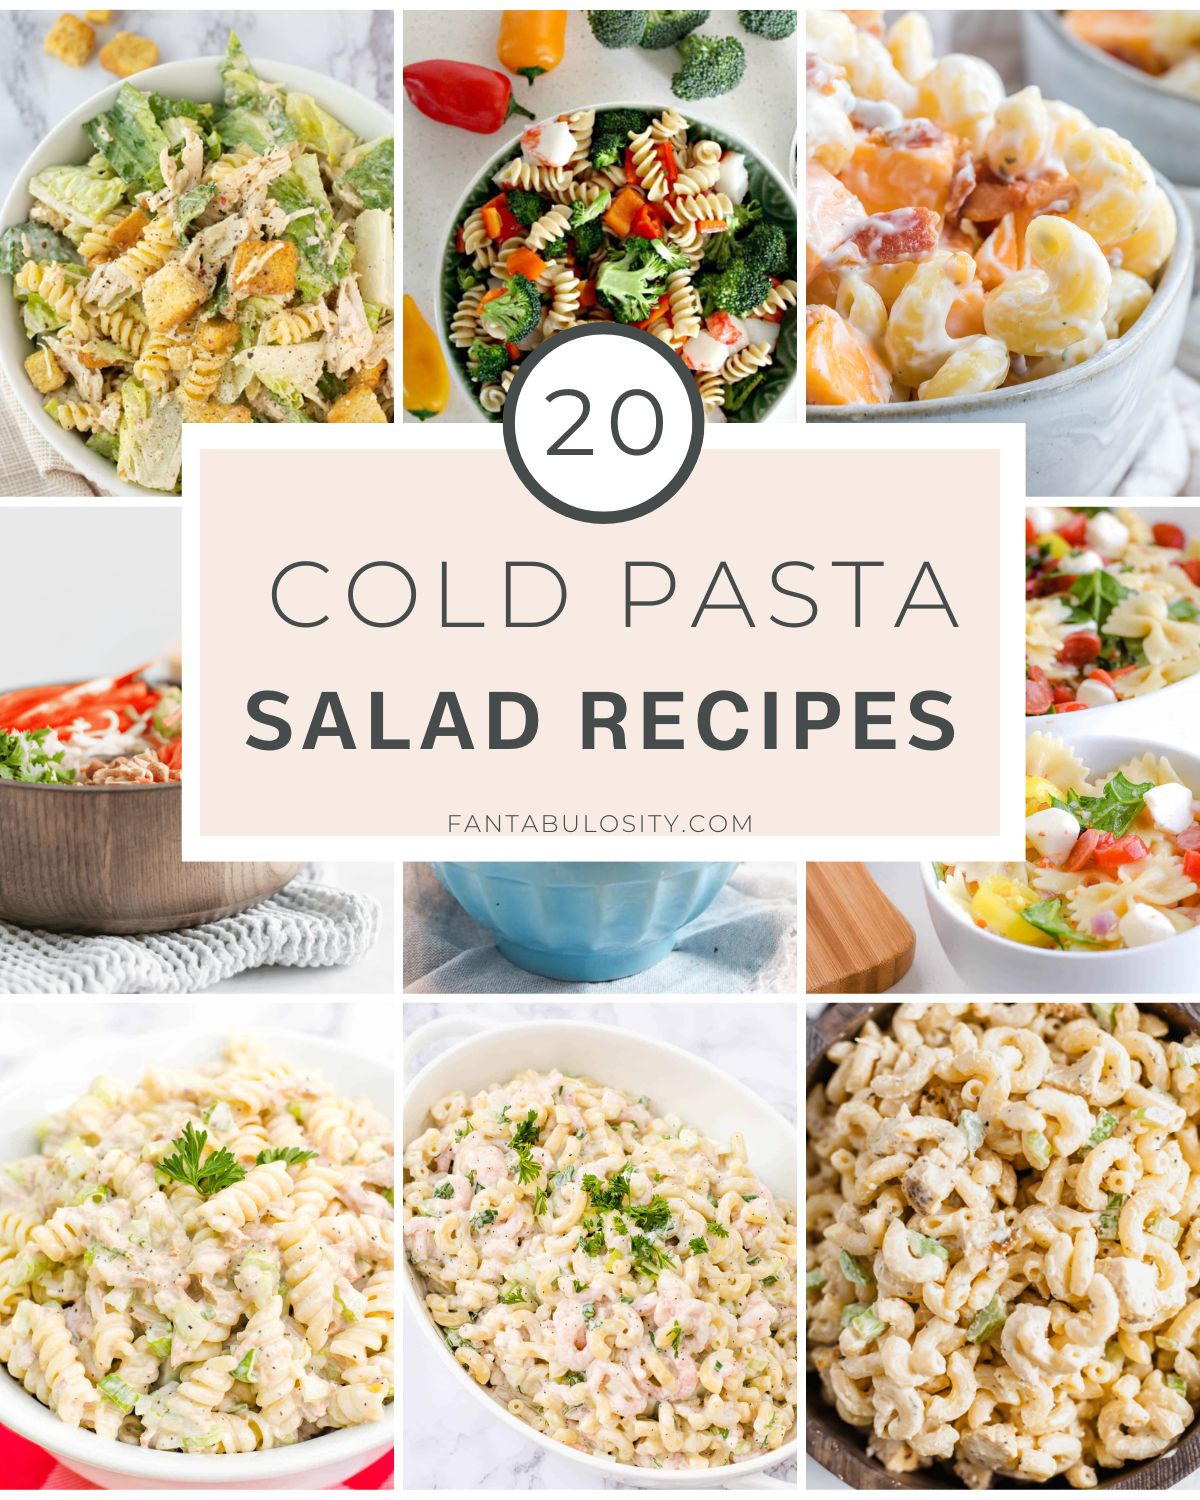 Cold pasta salad recipes collage. 